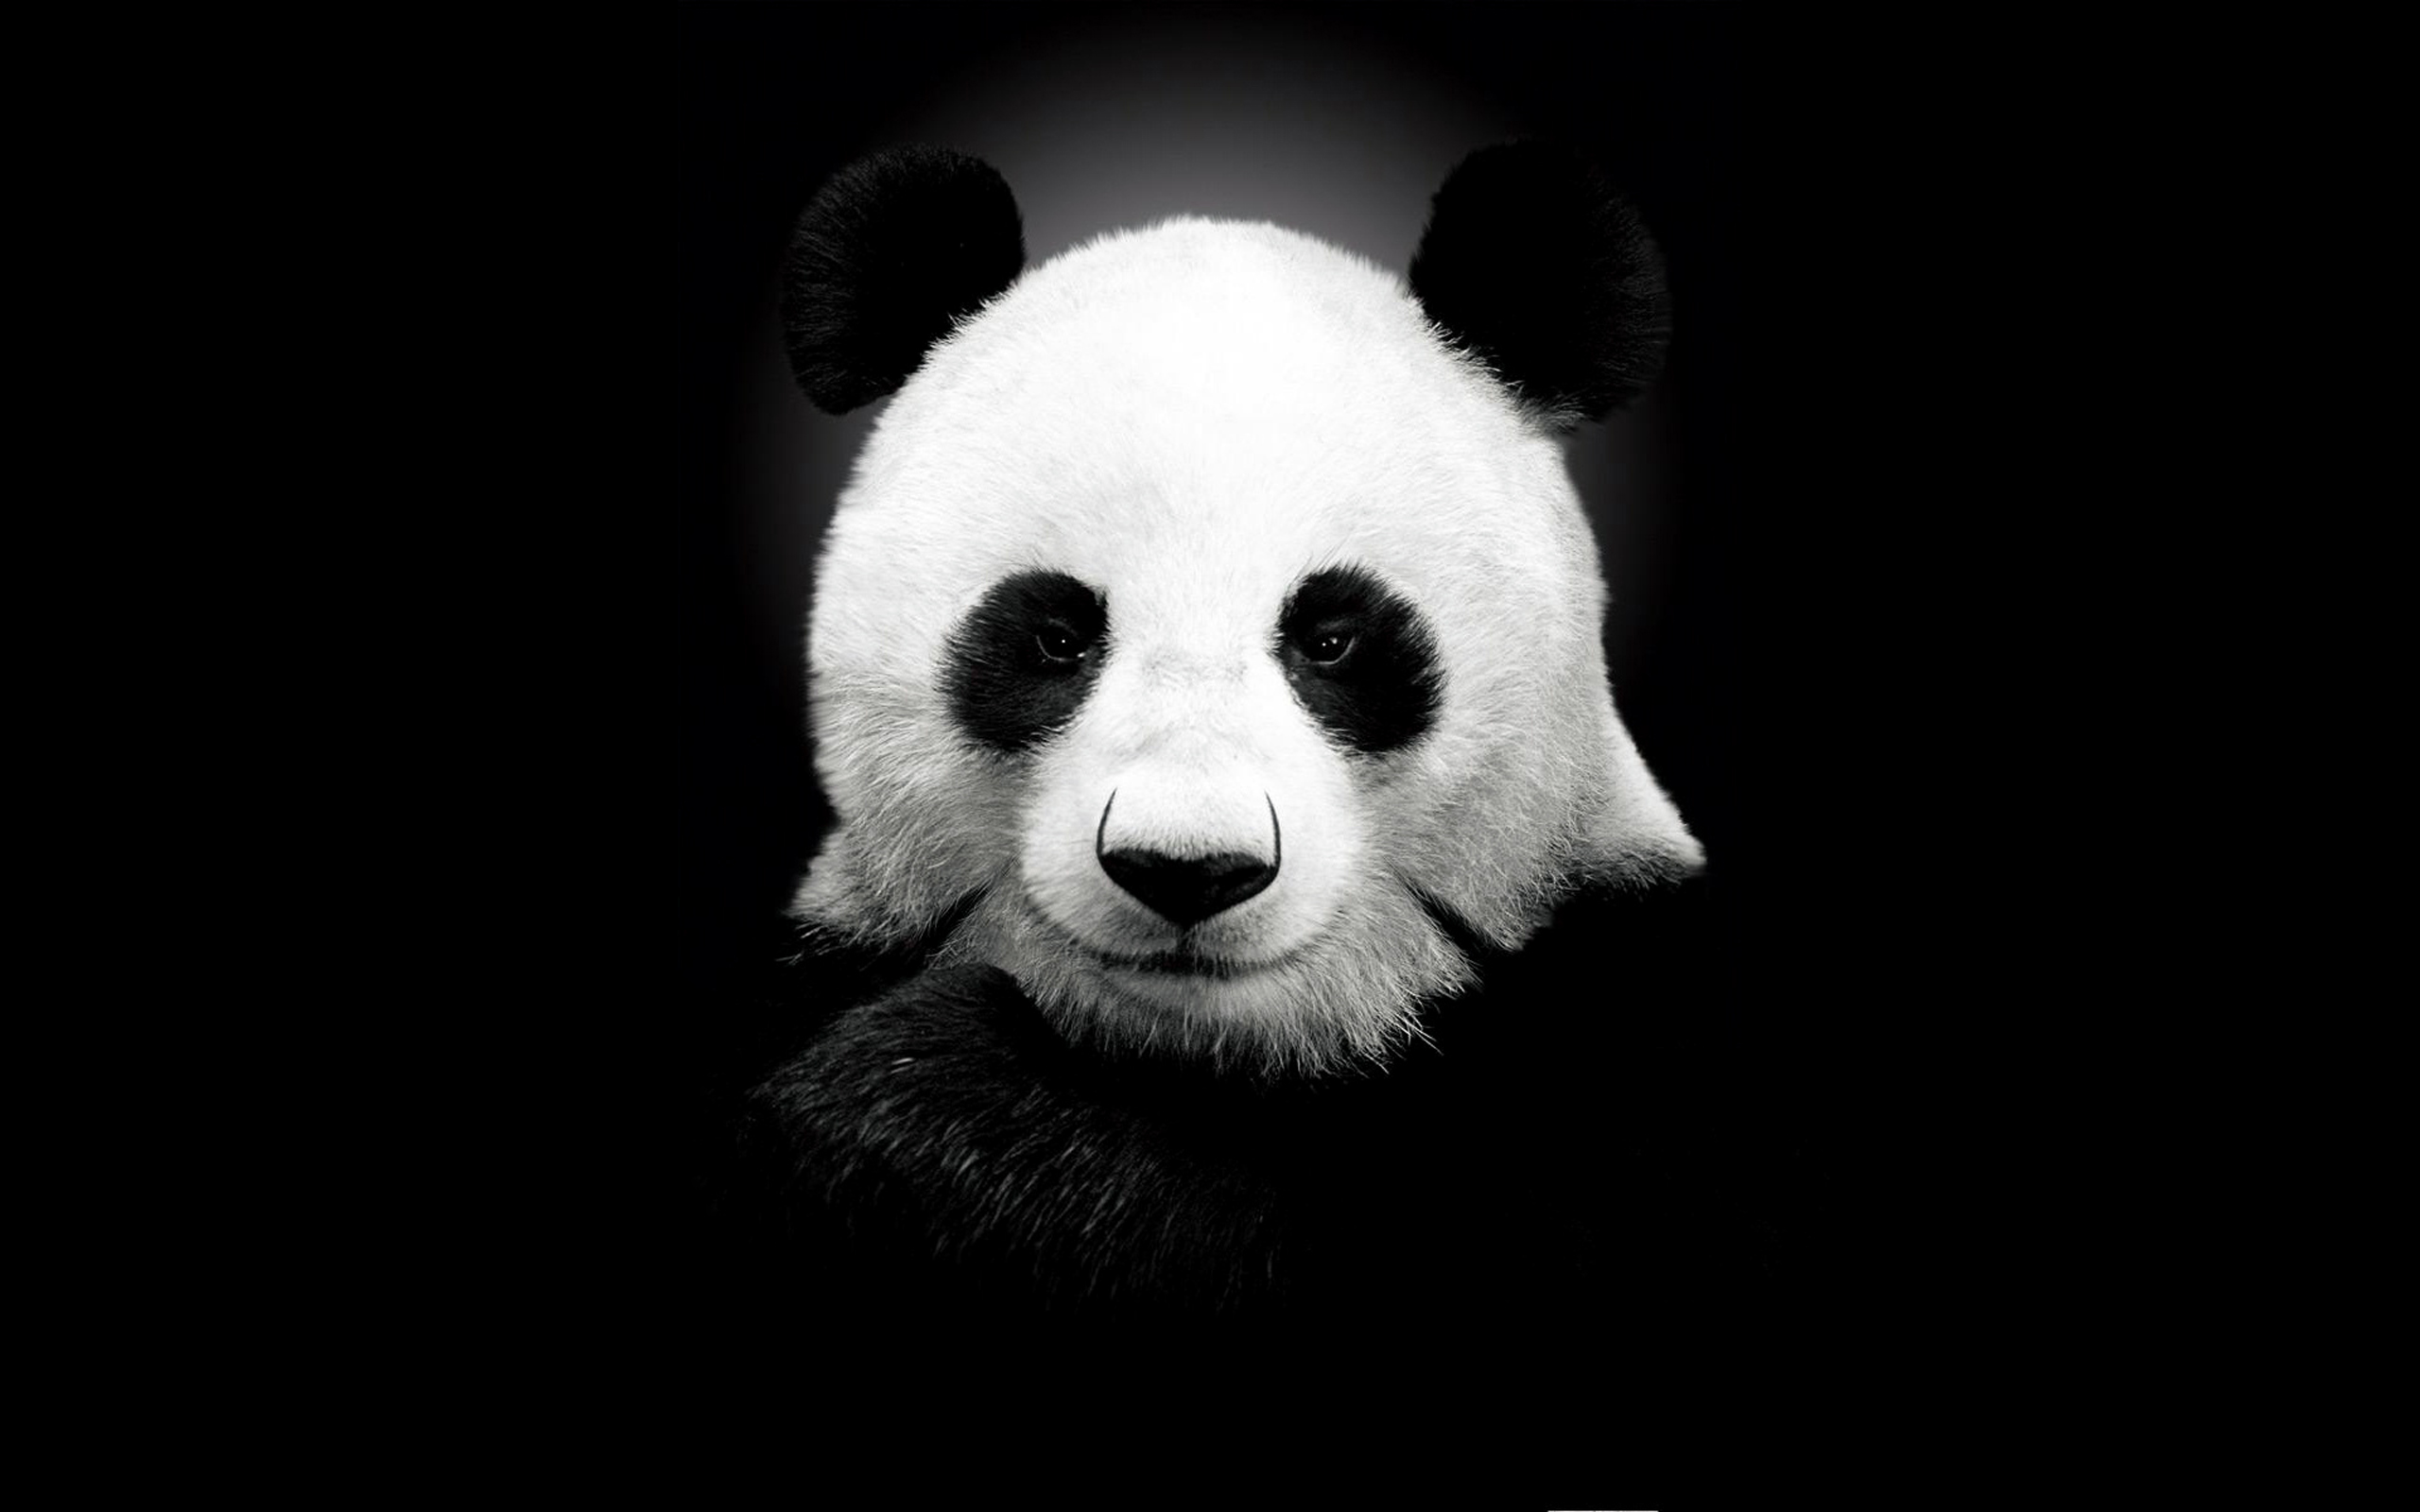 Giant panda black and white wallpaper 2560x1600 6080